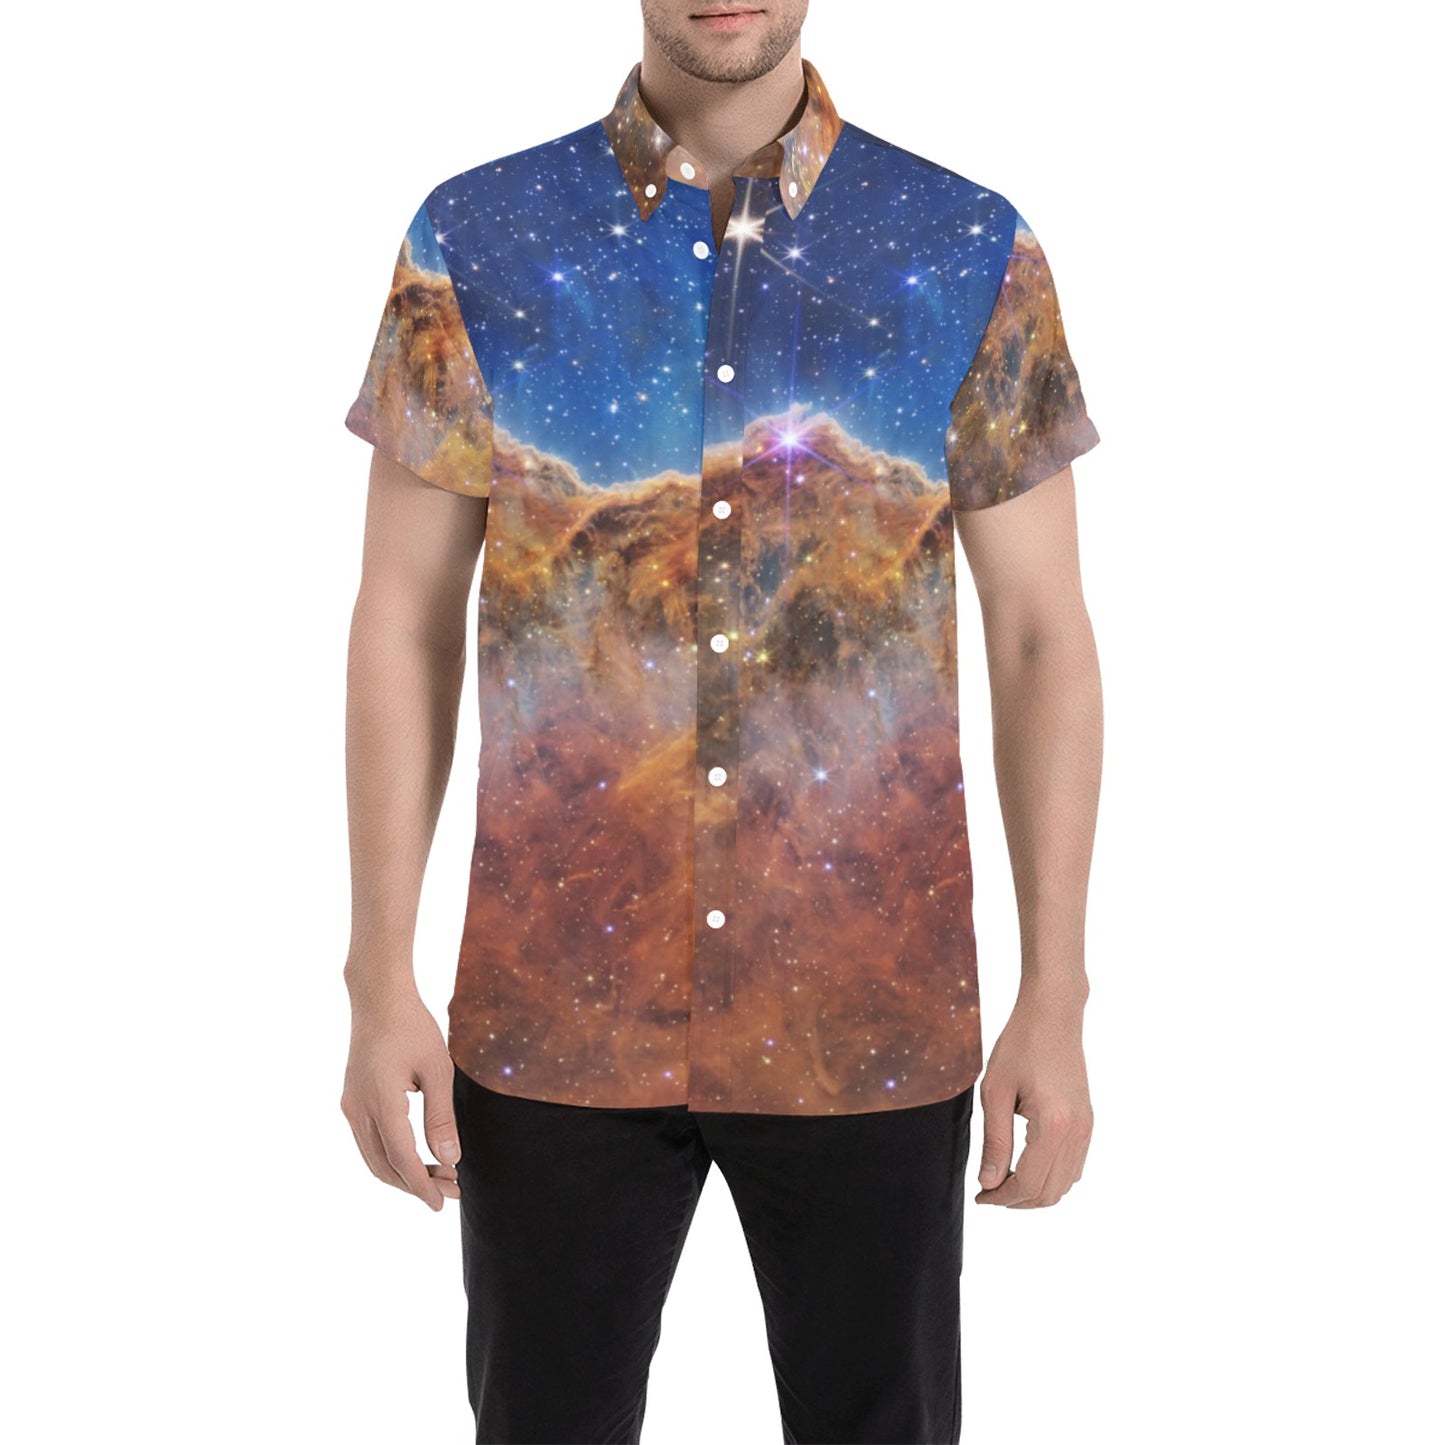 JWST Carina Nebula Shirt Short Sleeves